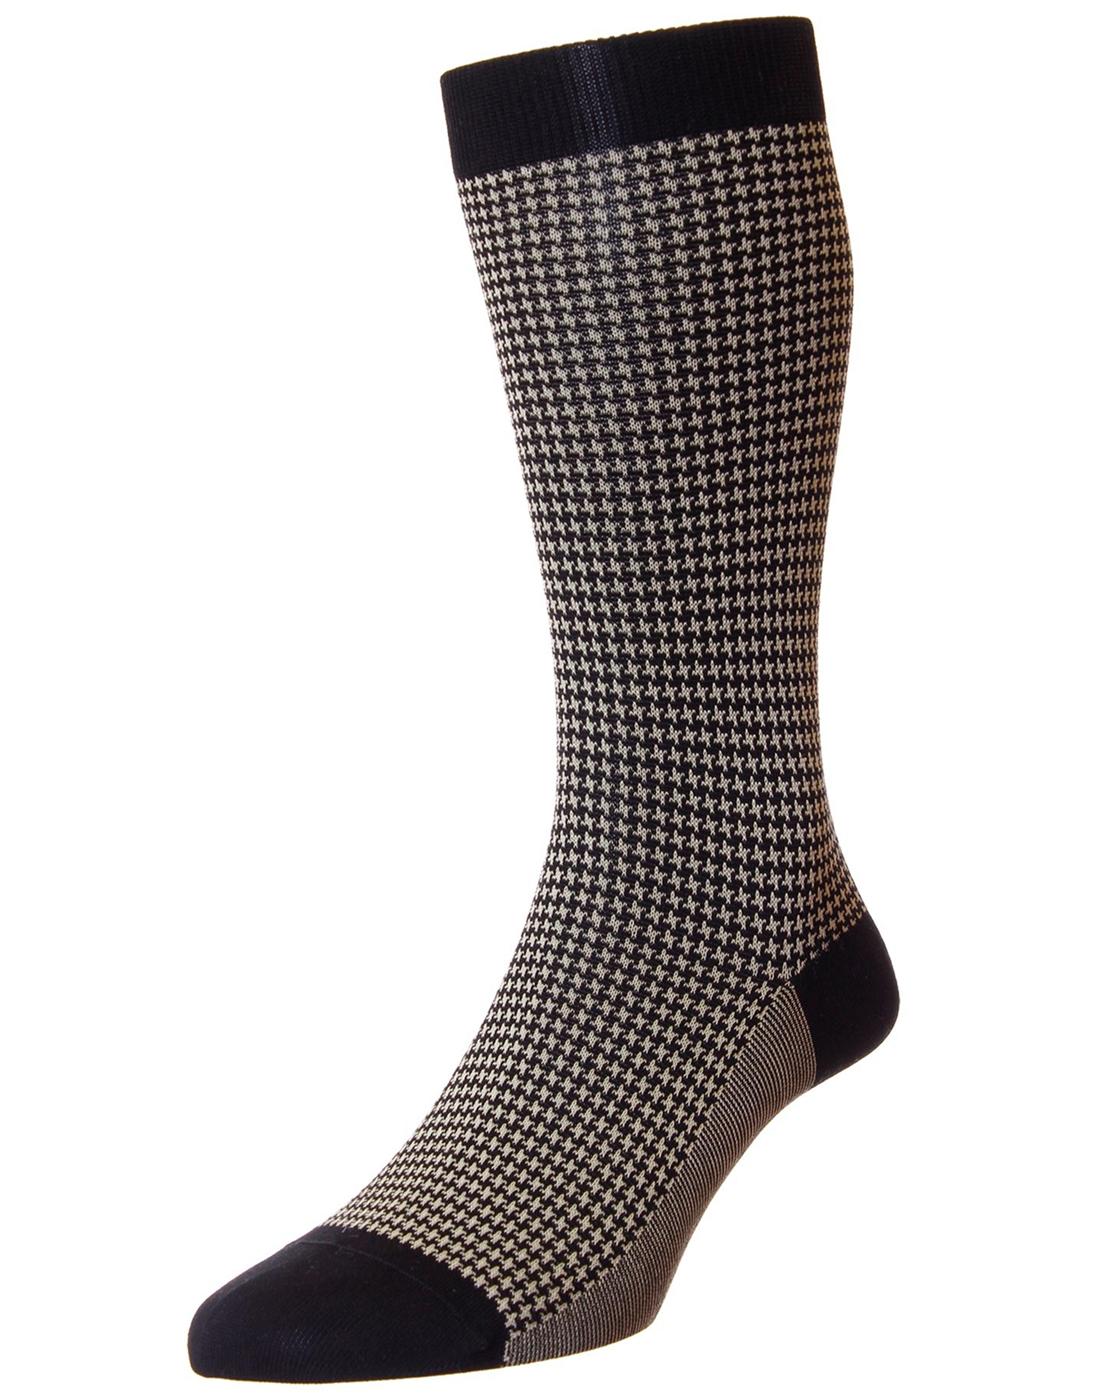 Hampstead PANTHERELLA Retro 60s Mod Dogtooth Socks